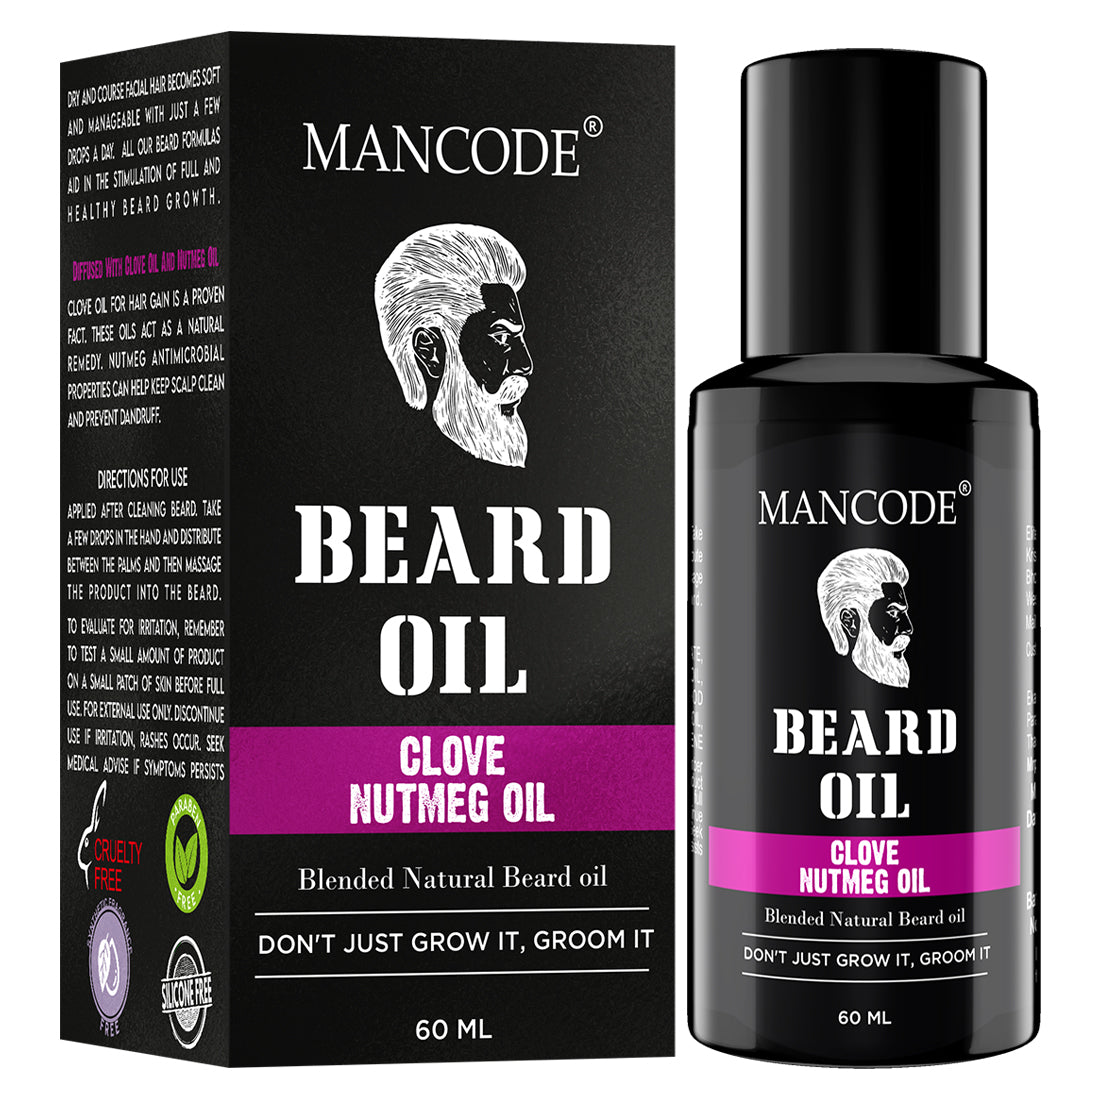 Mancode Clove  Nutmeg Beard Oil  60ML